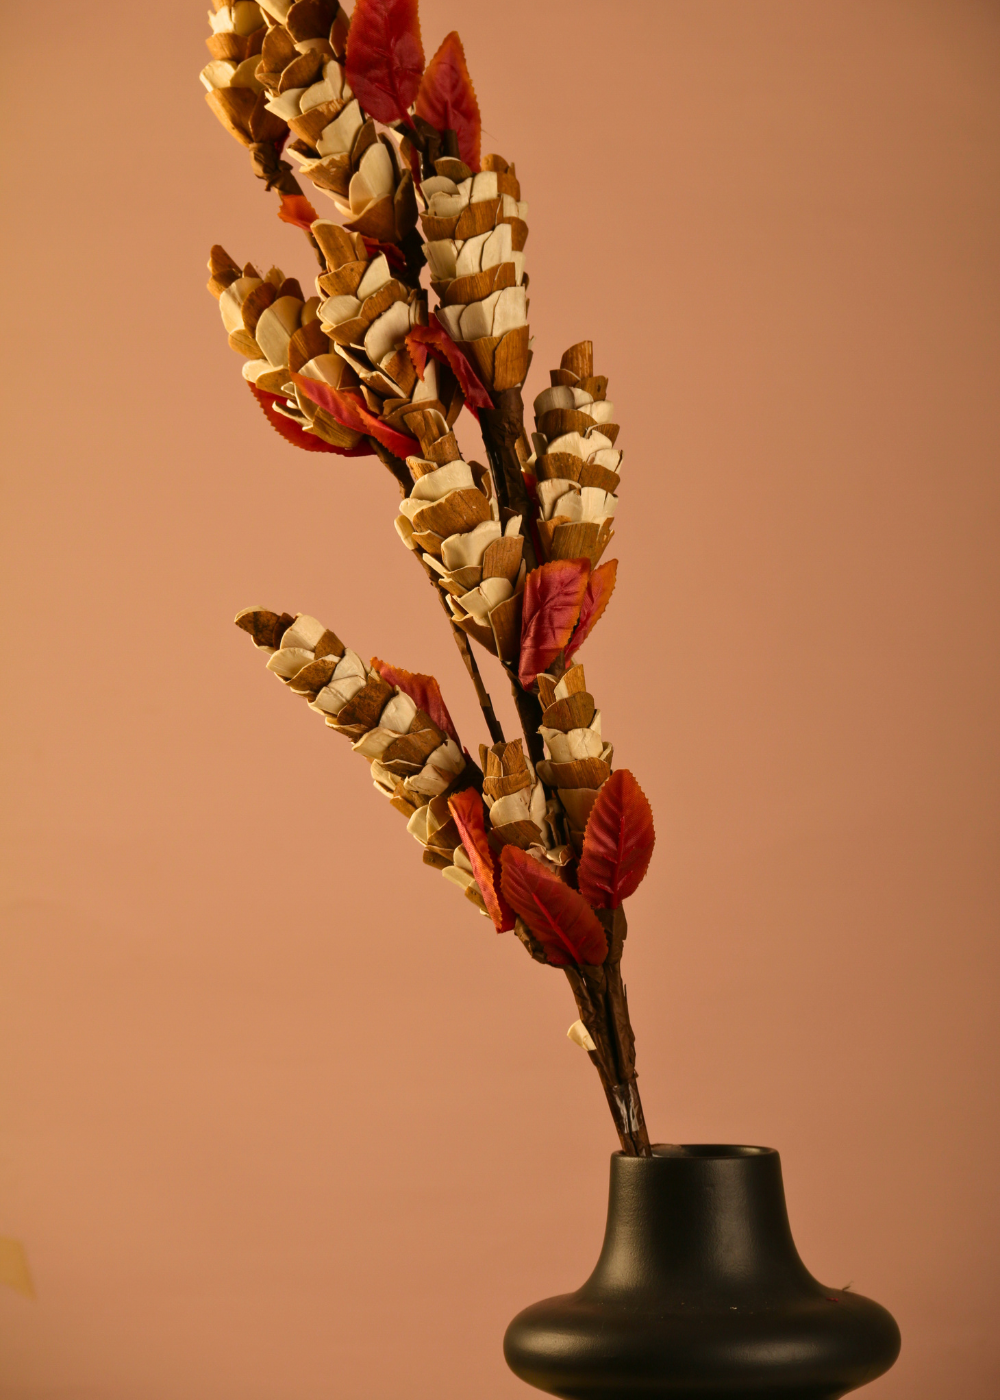 Brown chains dried flower bouquet